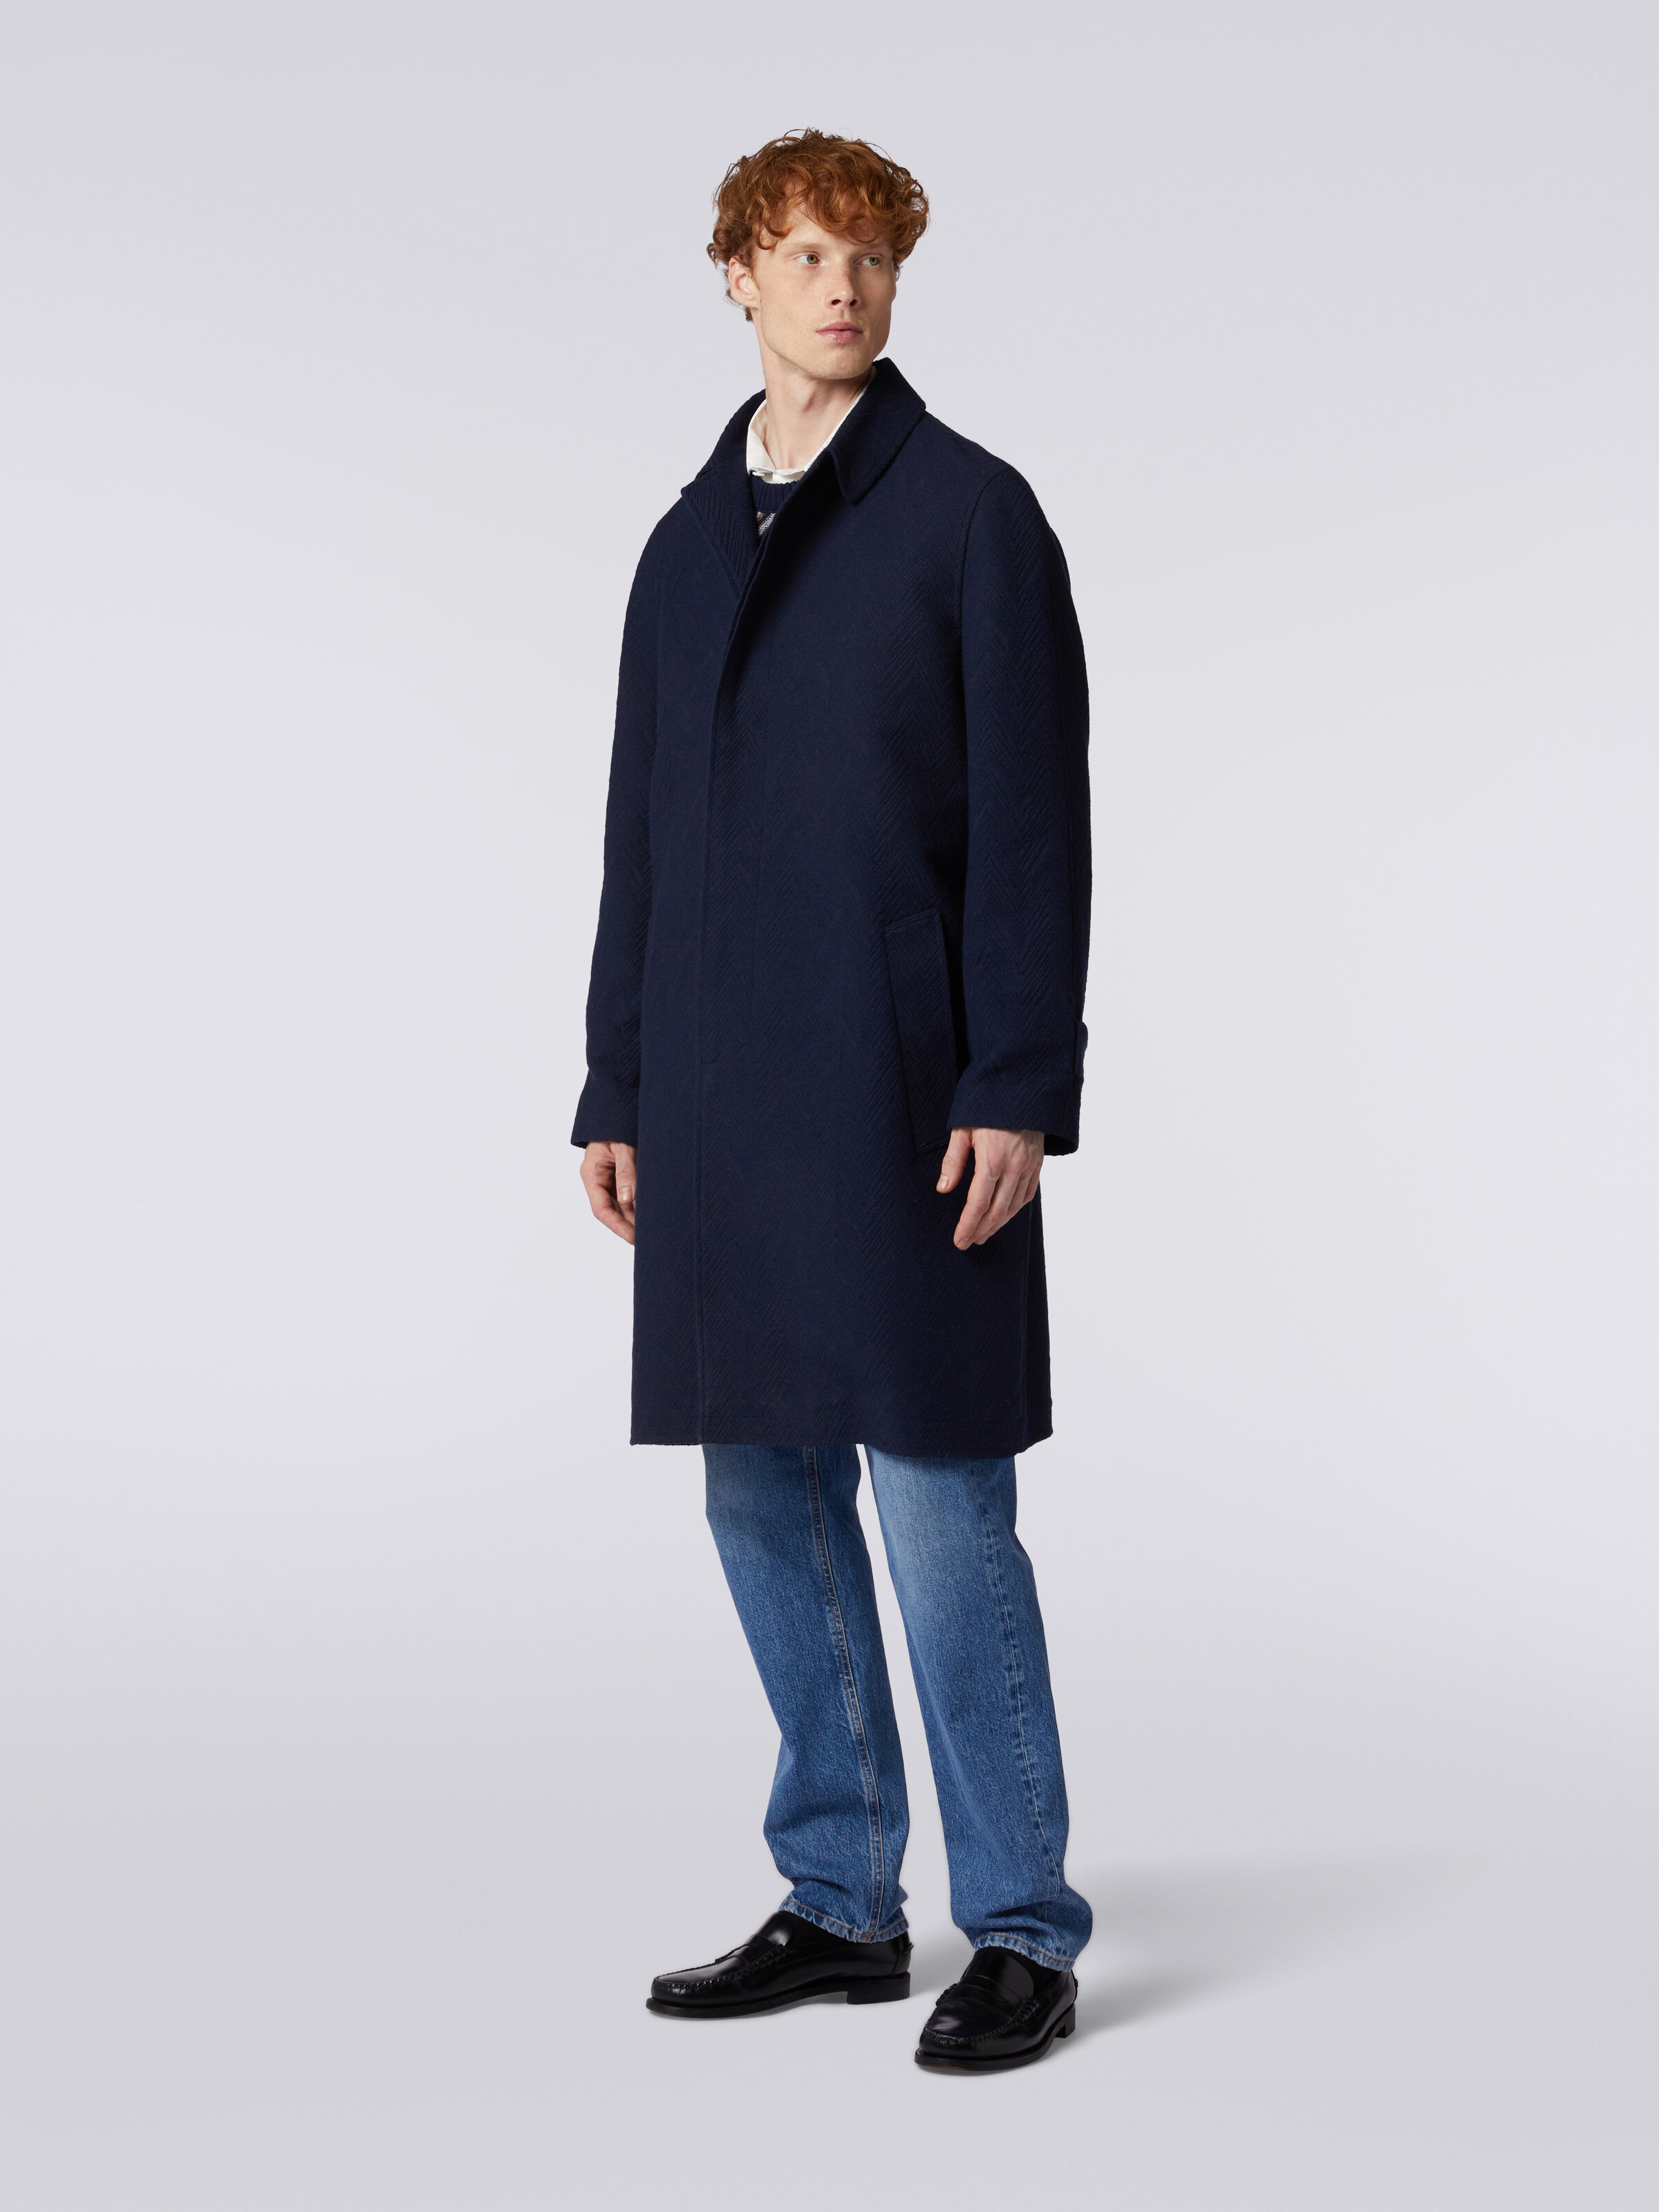 Jacquard wool blend coat with zigzag pattern, Dark Blue - 2